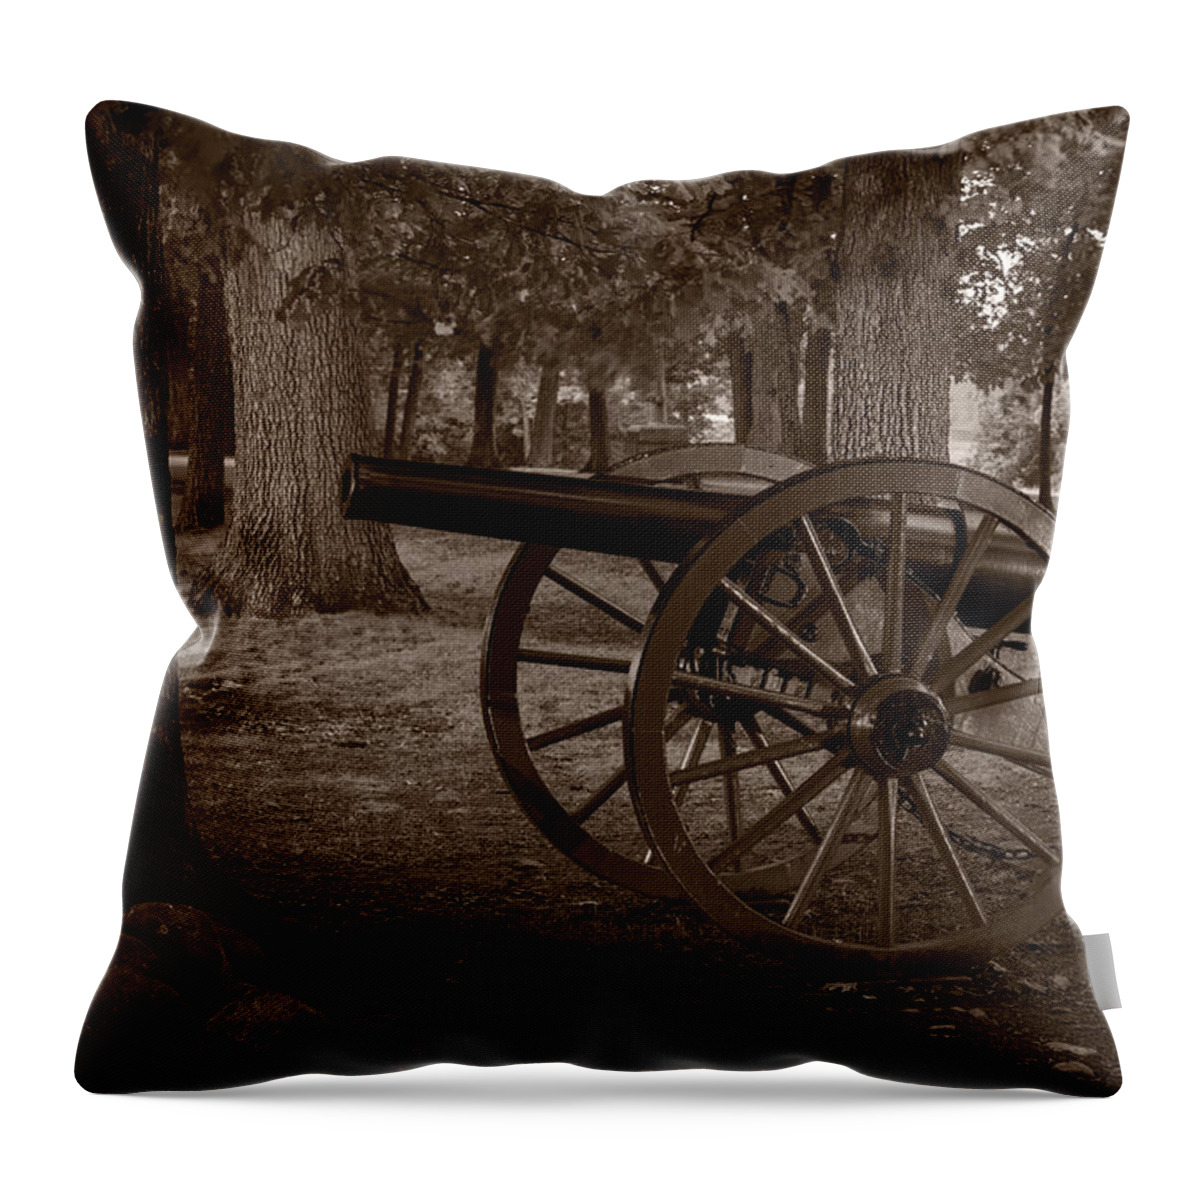 Gettysburg Throw Pillow featuring the photograph Gettysburg Cannon B W by Steve Gadomski